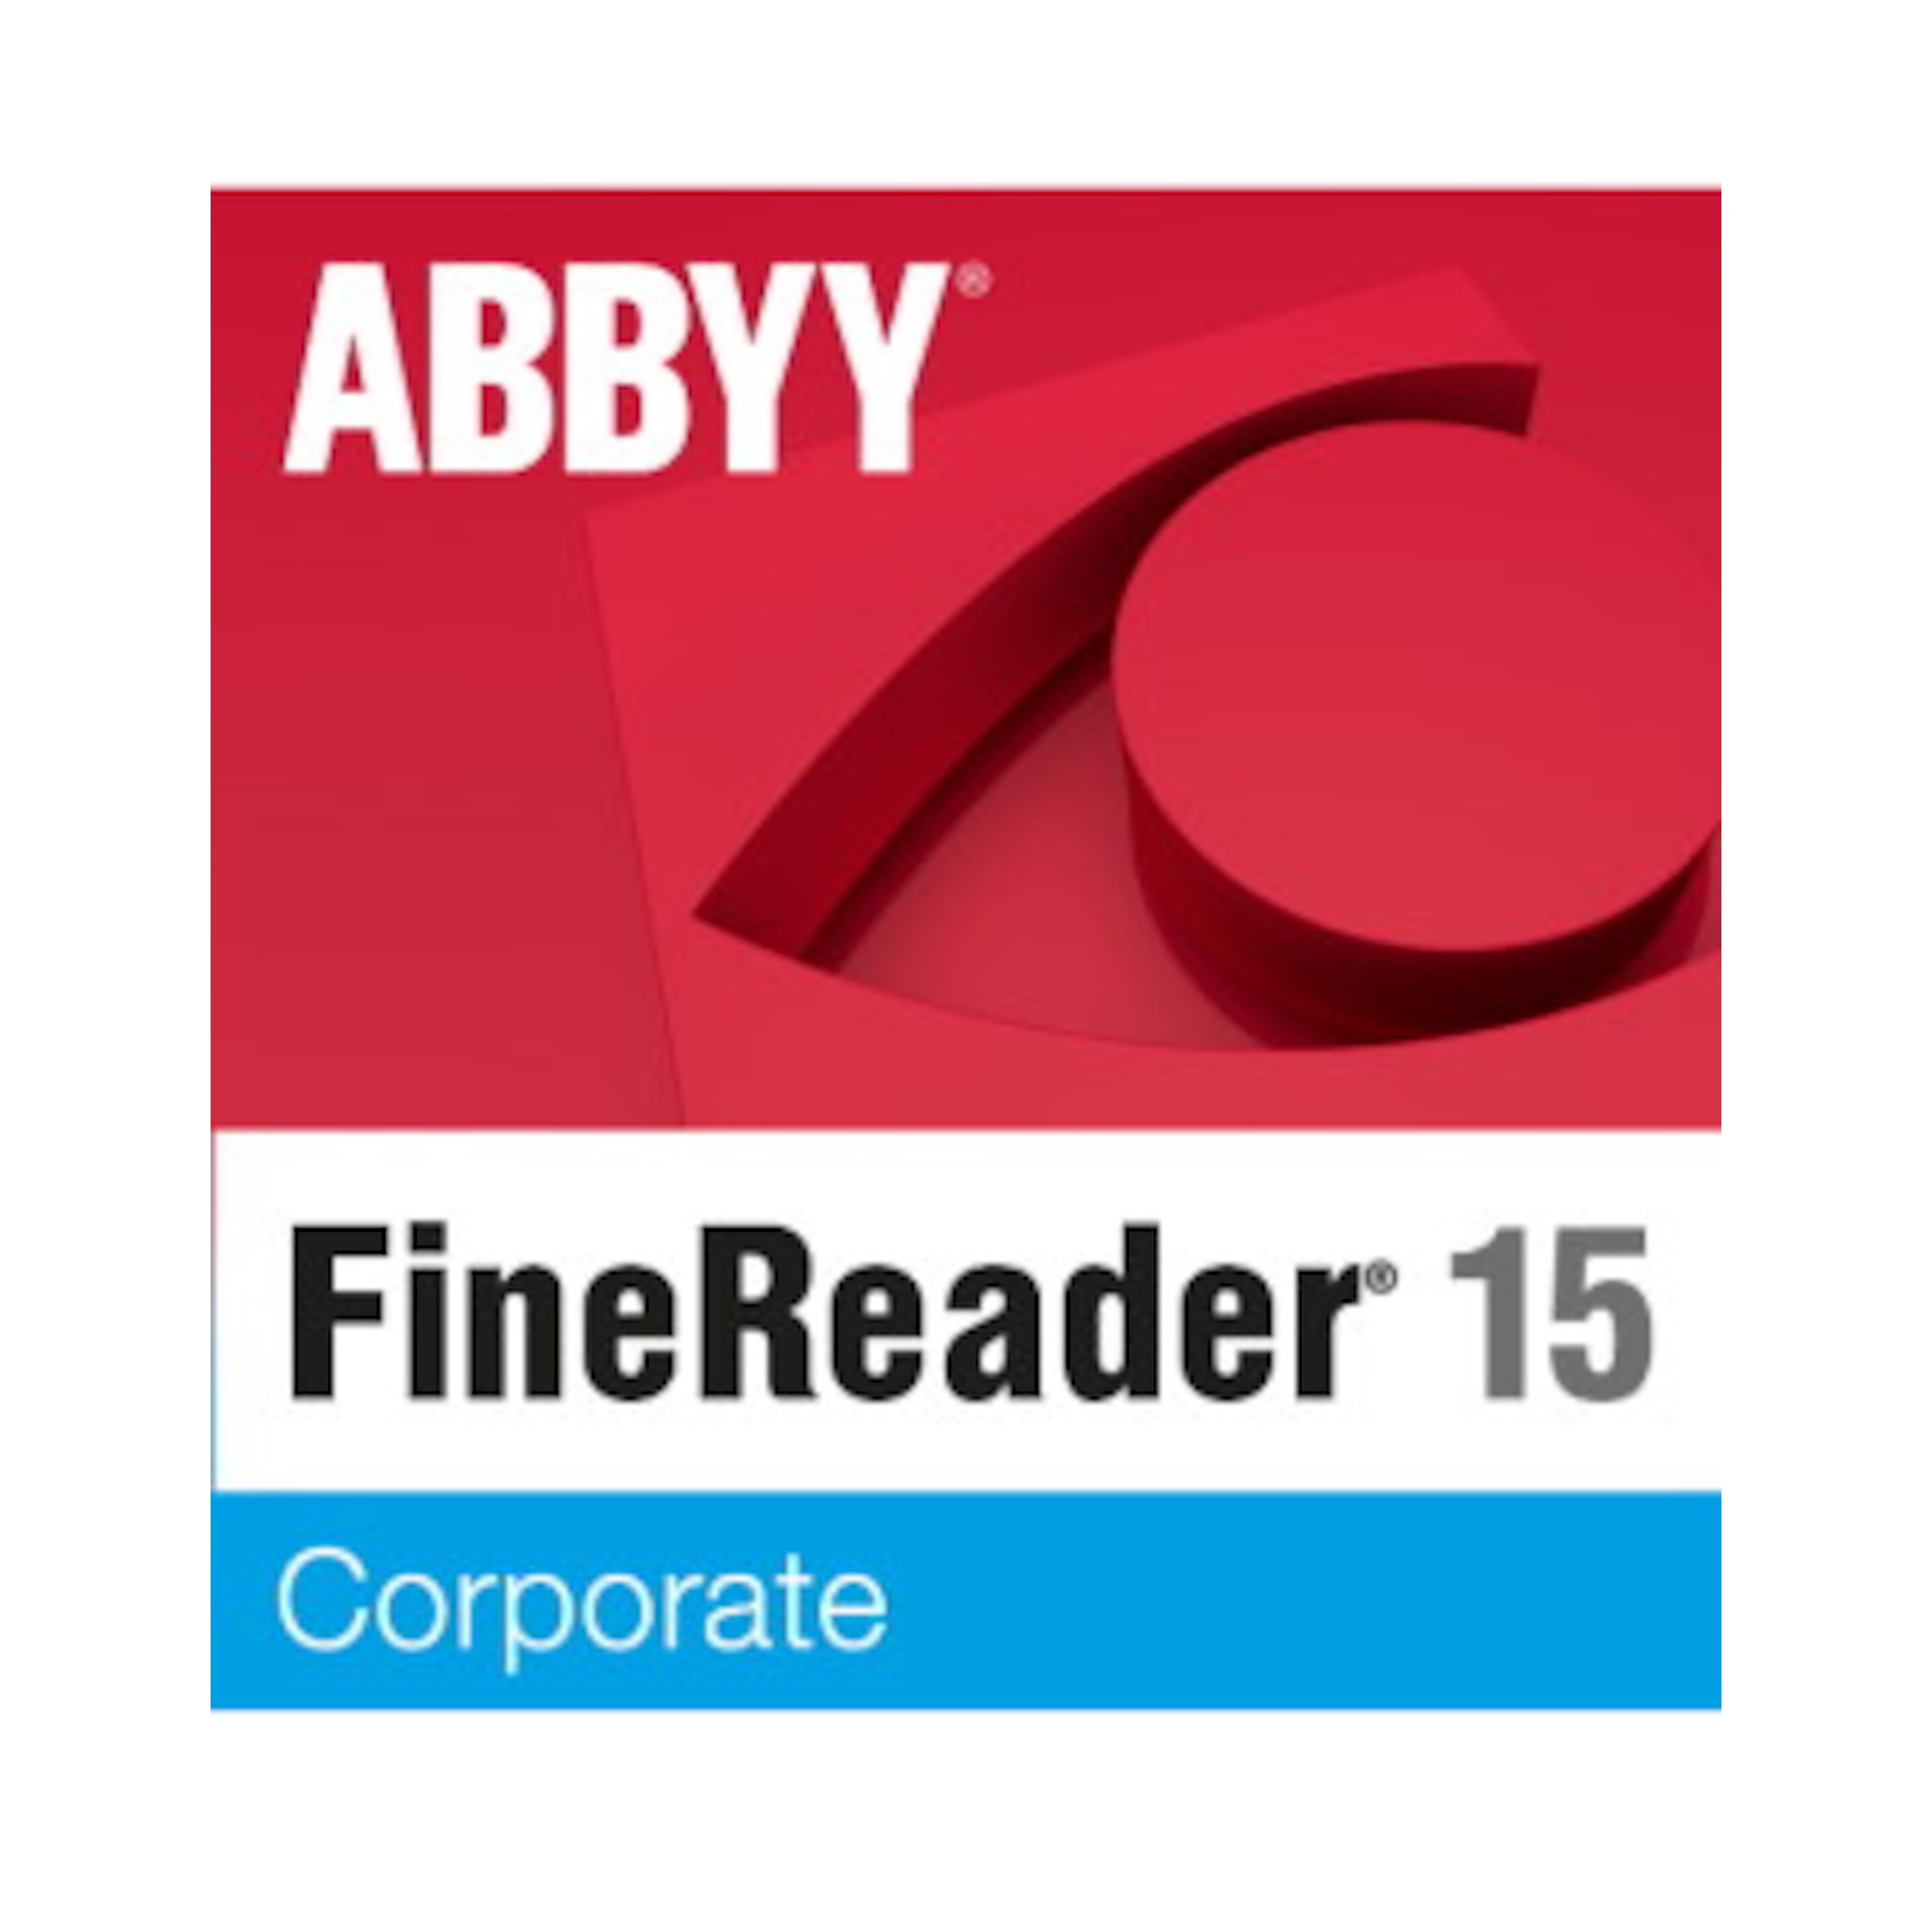 abbyy finereader pdf 15 corporate